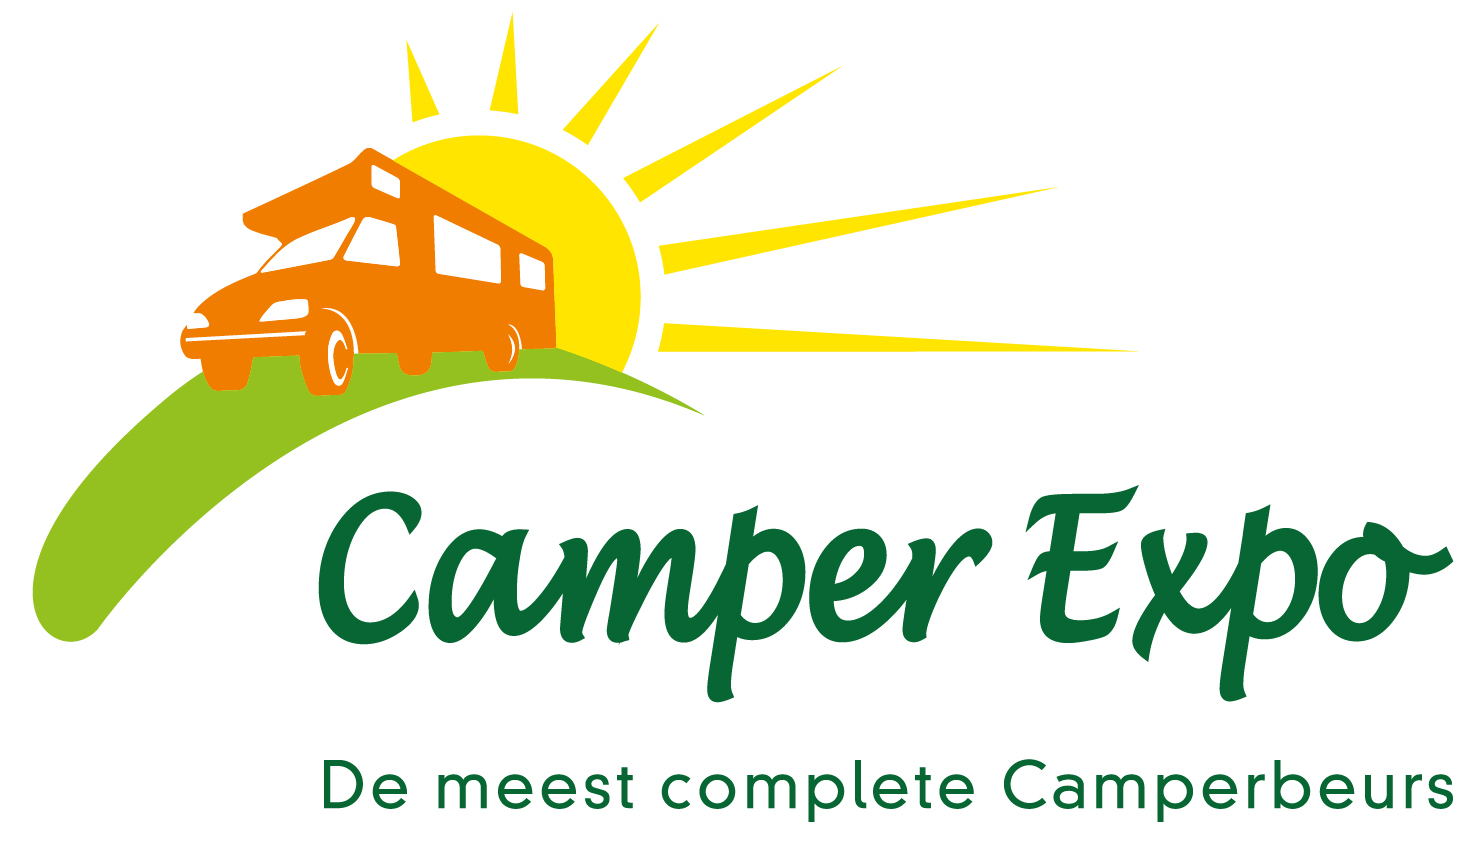 Camper Expo